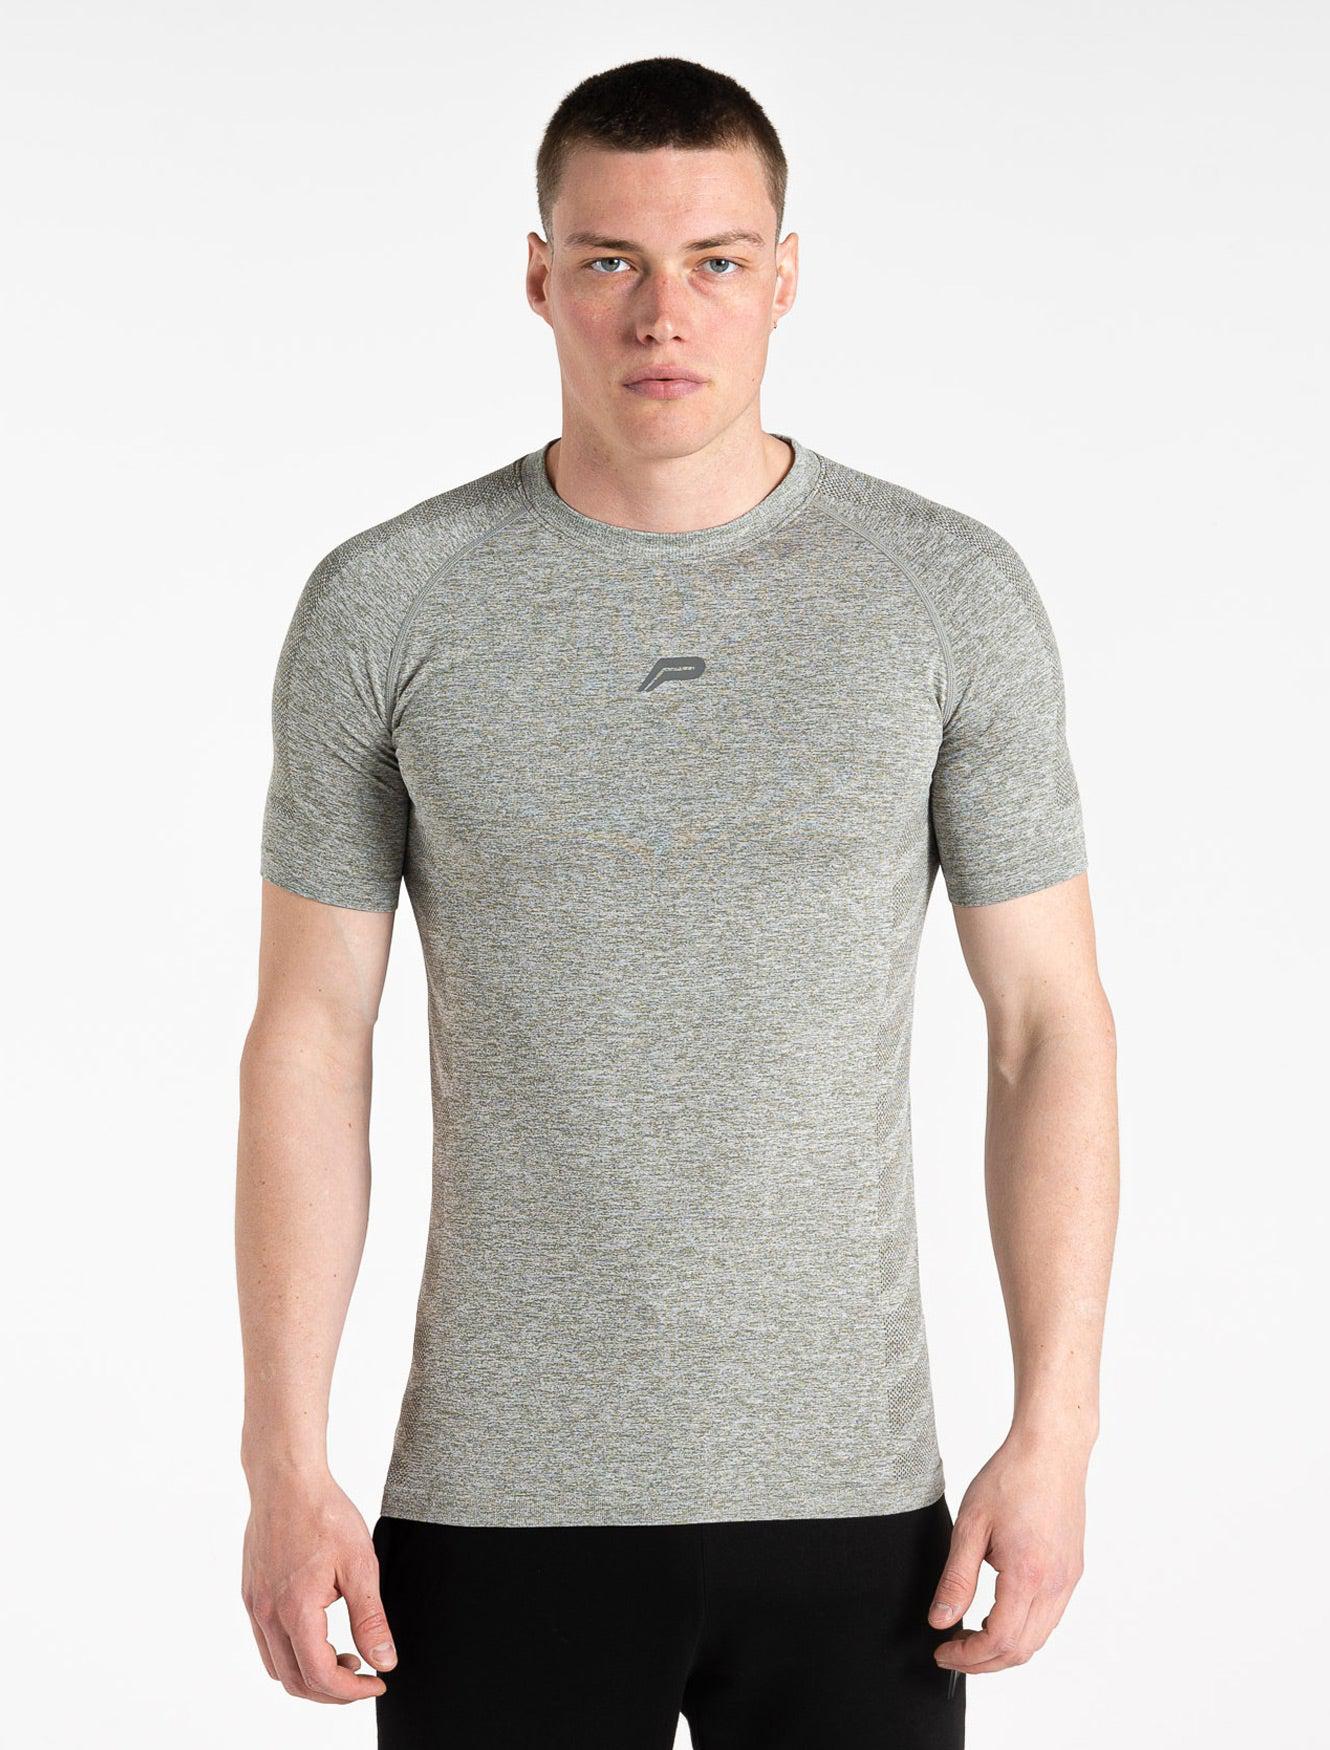 Intensity Seamless T-shirt / Khaki Marl Pursue Fitness 3